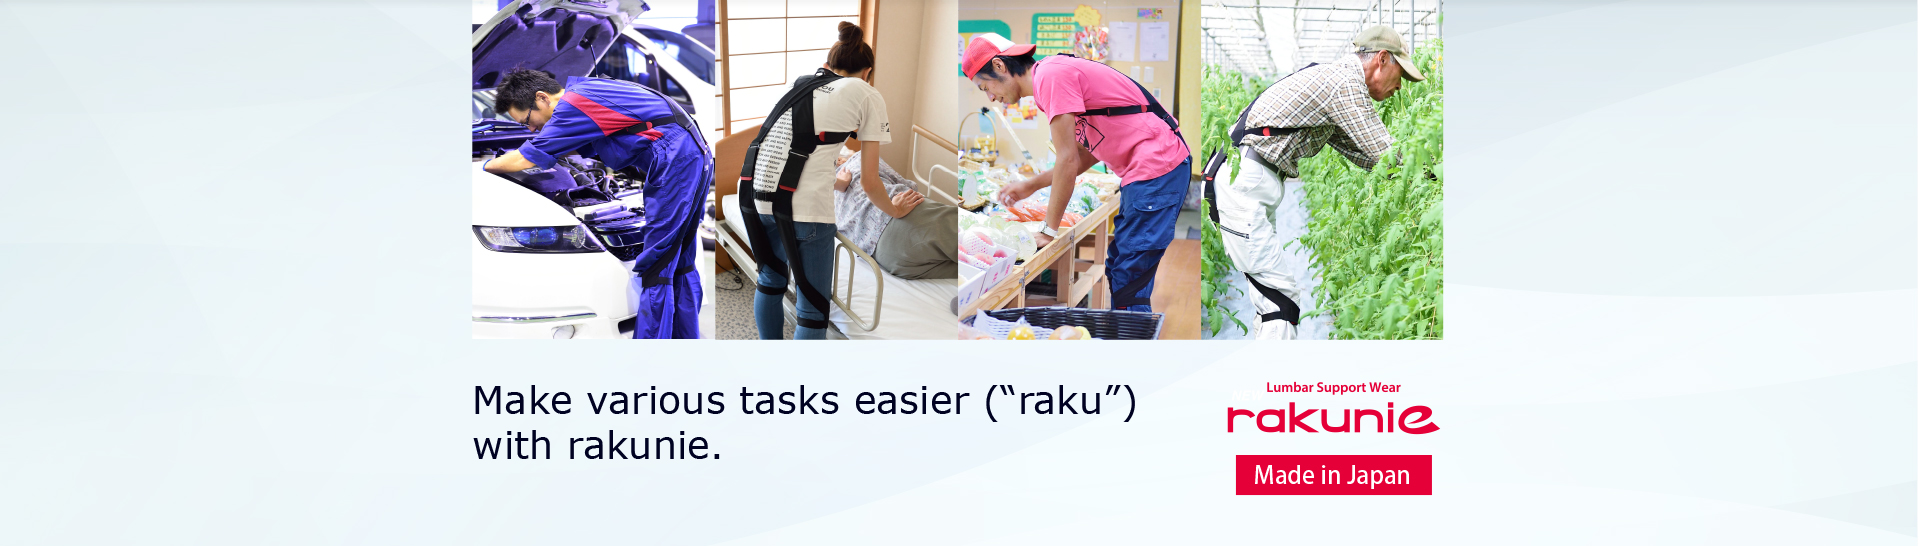 Make various tasks easier(“raku”) with rakunie.